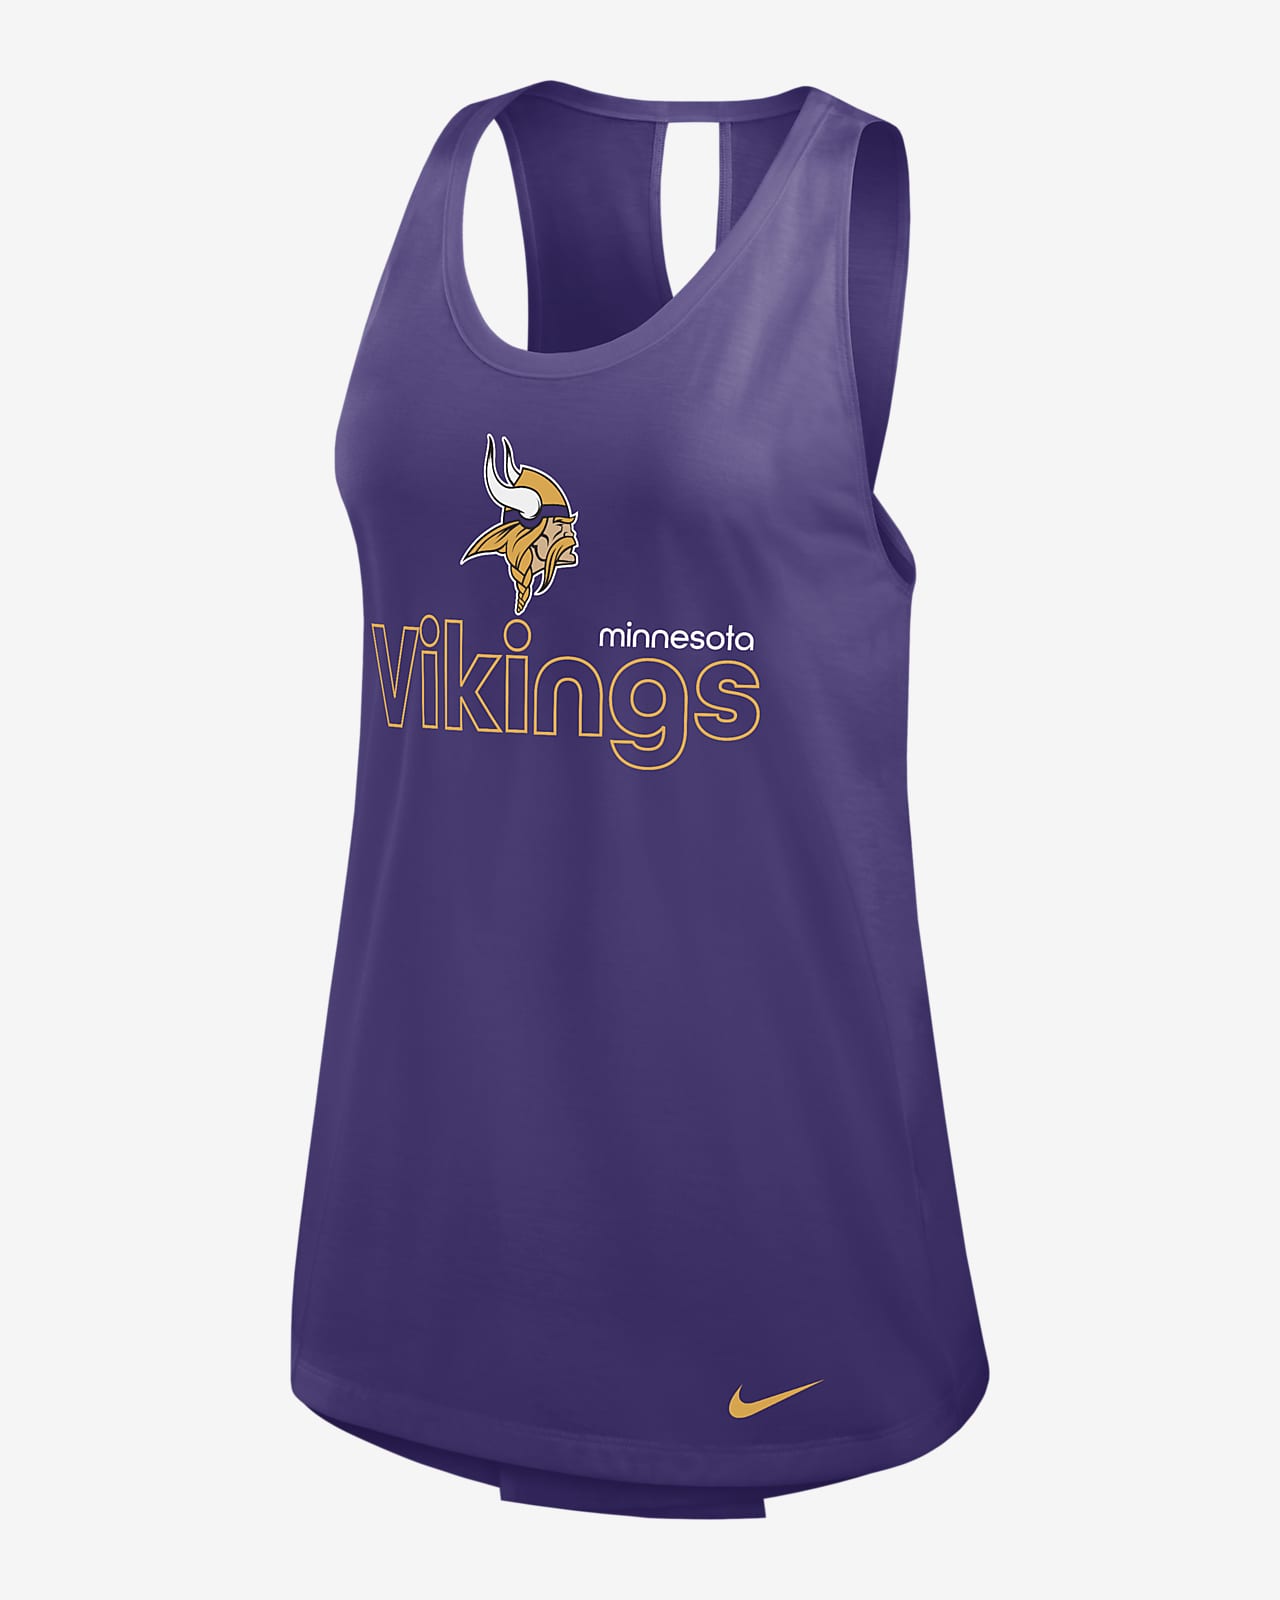 Camiseta de tirantes Nike Dri-FIT de la NFL para mujer Minnesota Vikings